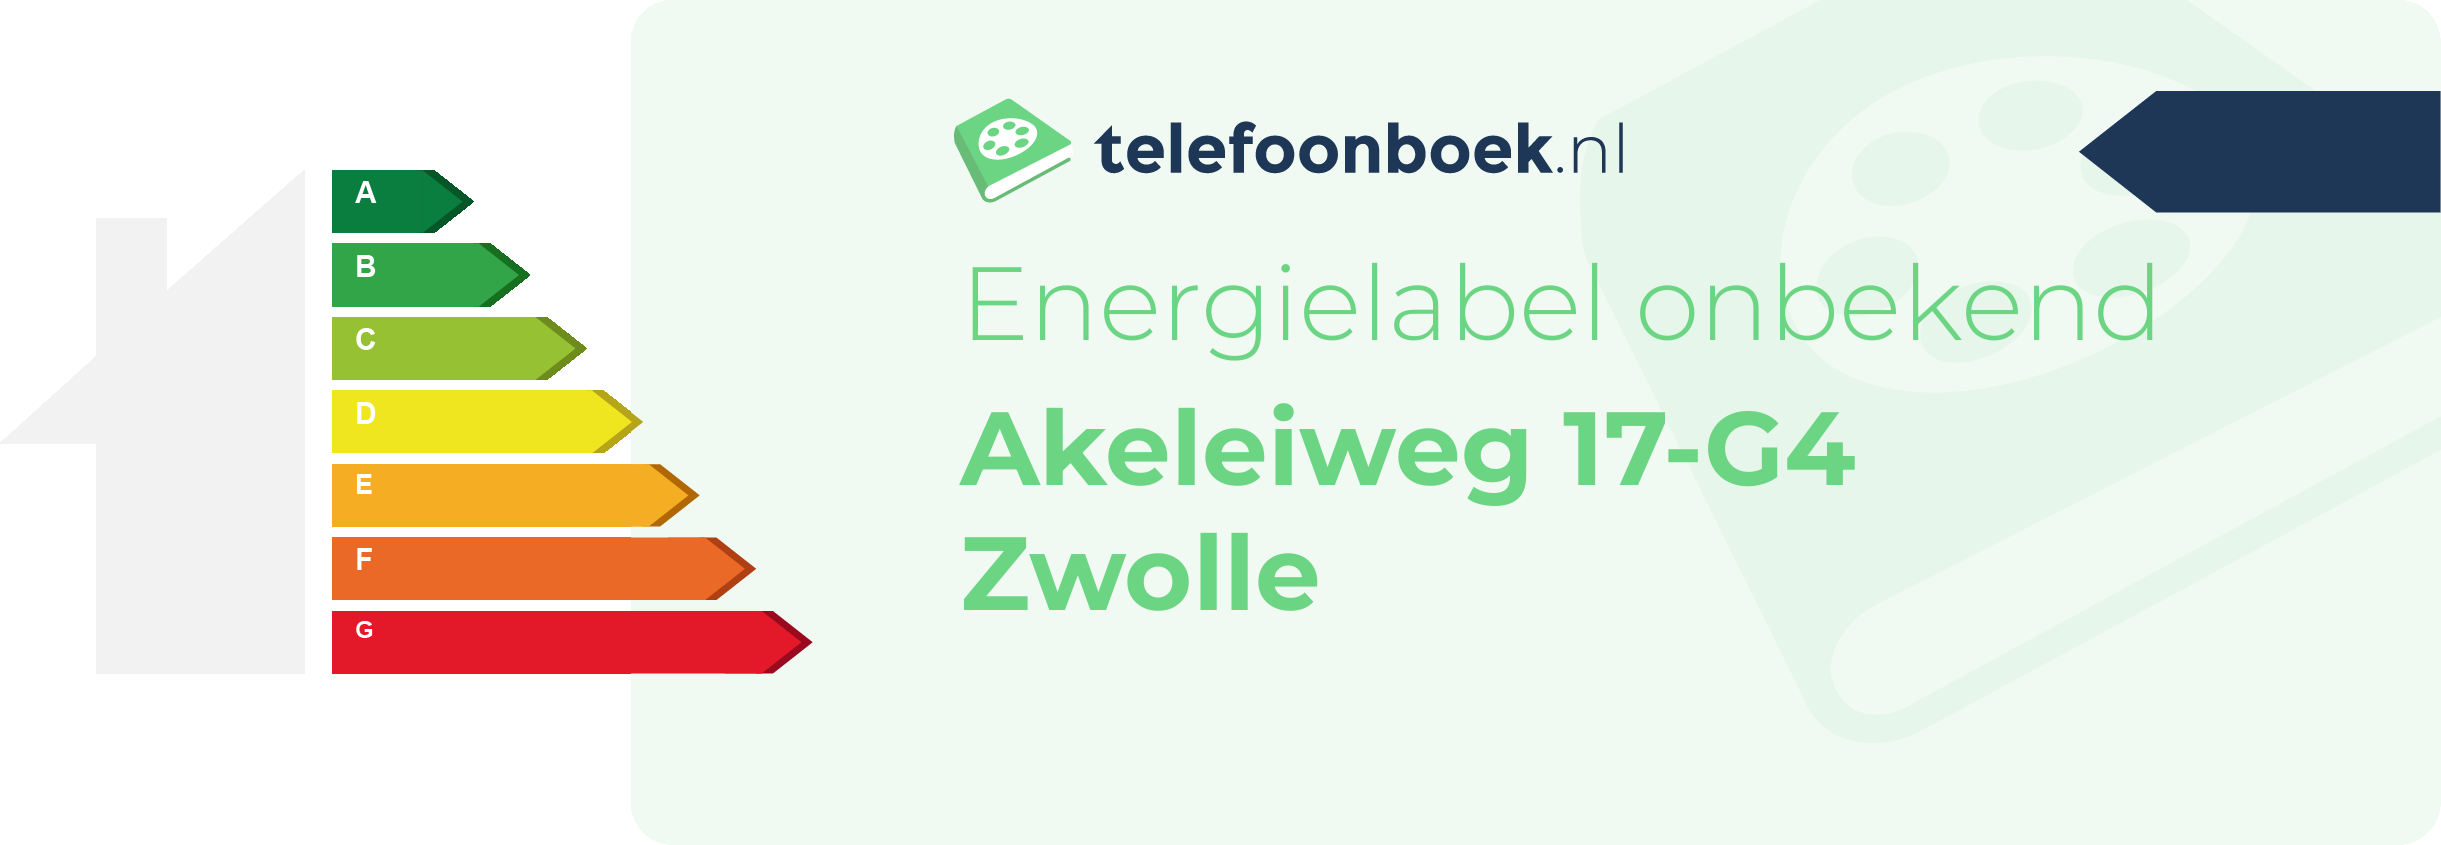 Energielabel Akeleiweg 17-G4 Zwolle